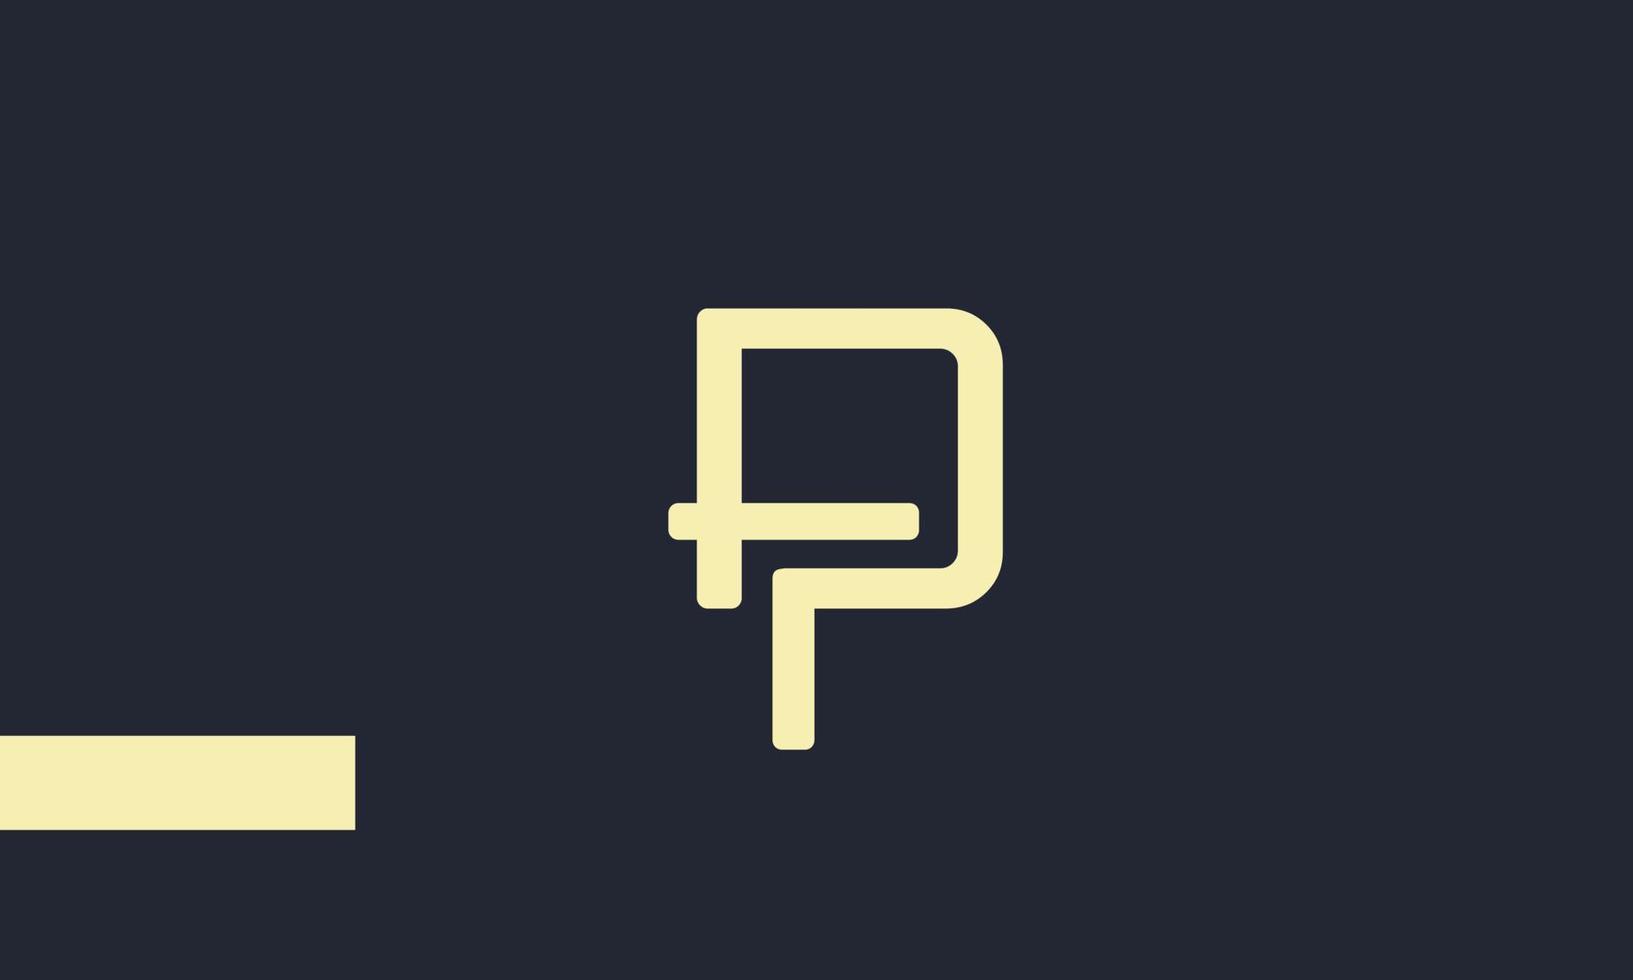 letras do alfabeto iniciais monograma logotipo fp, pf, f e p vetor